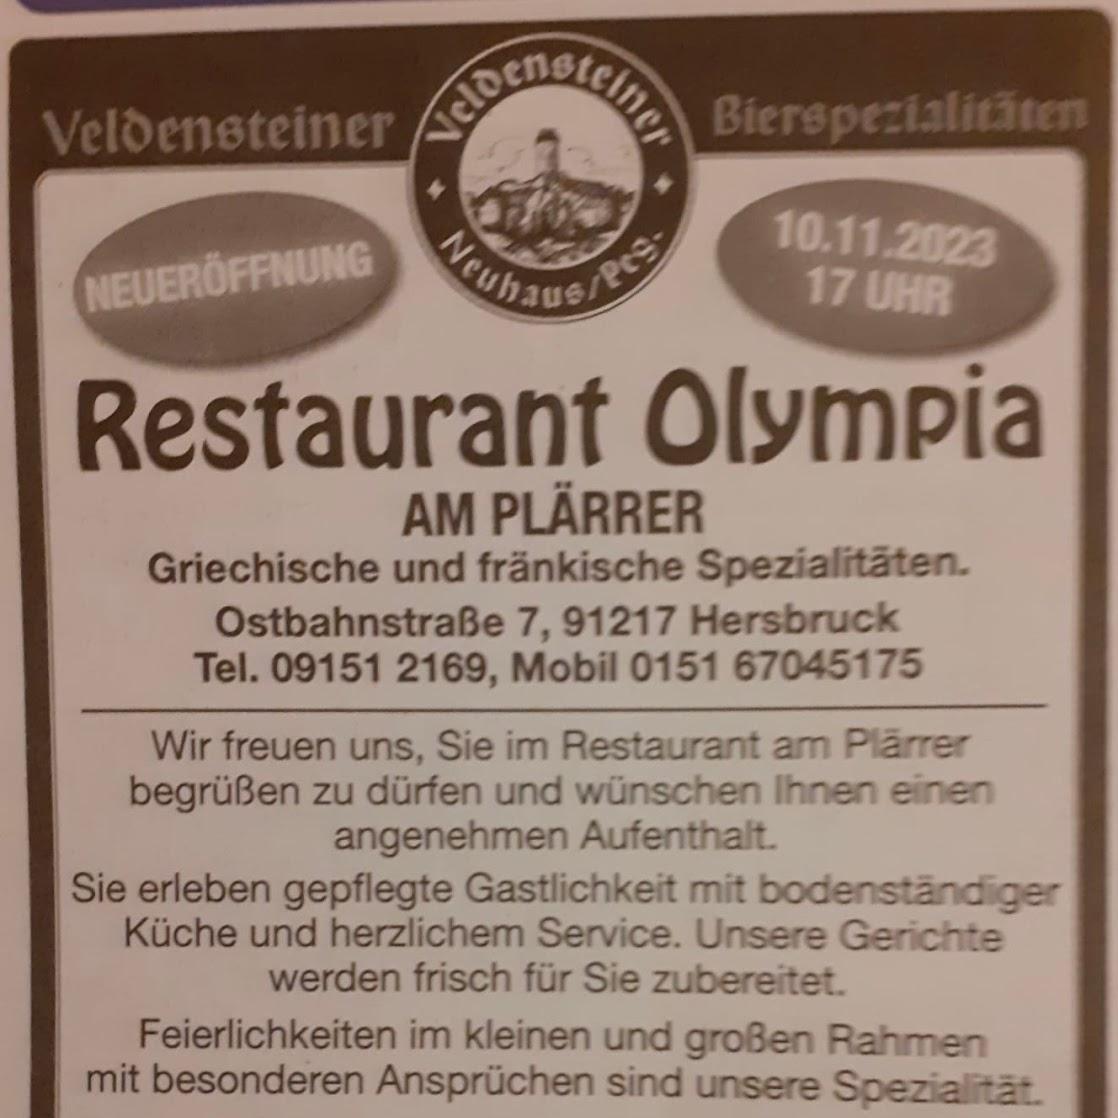 Restaurant "Restaurant Olympia" in Hersbruck